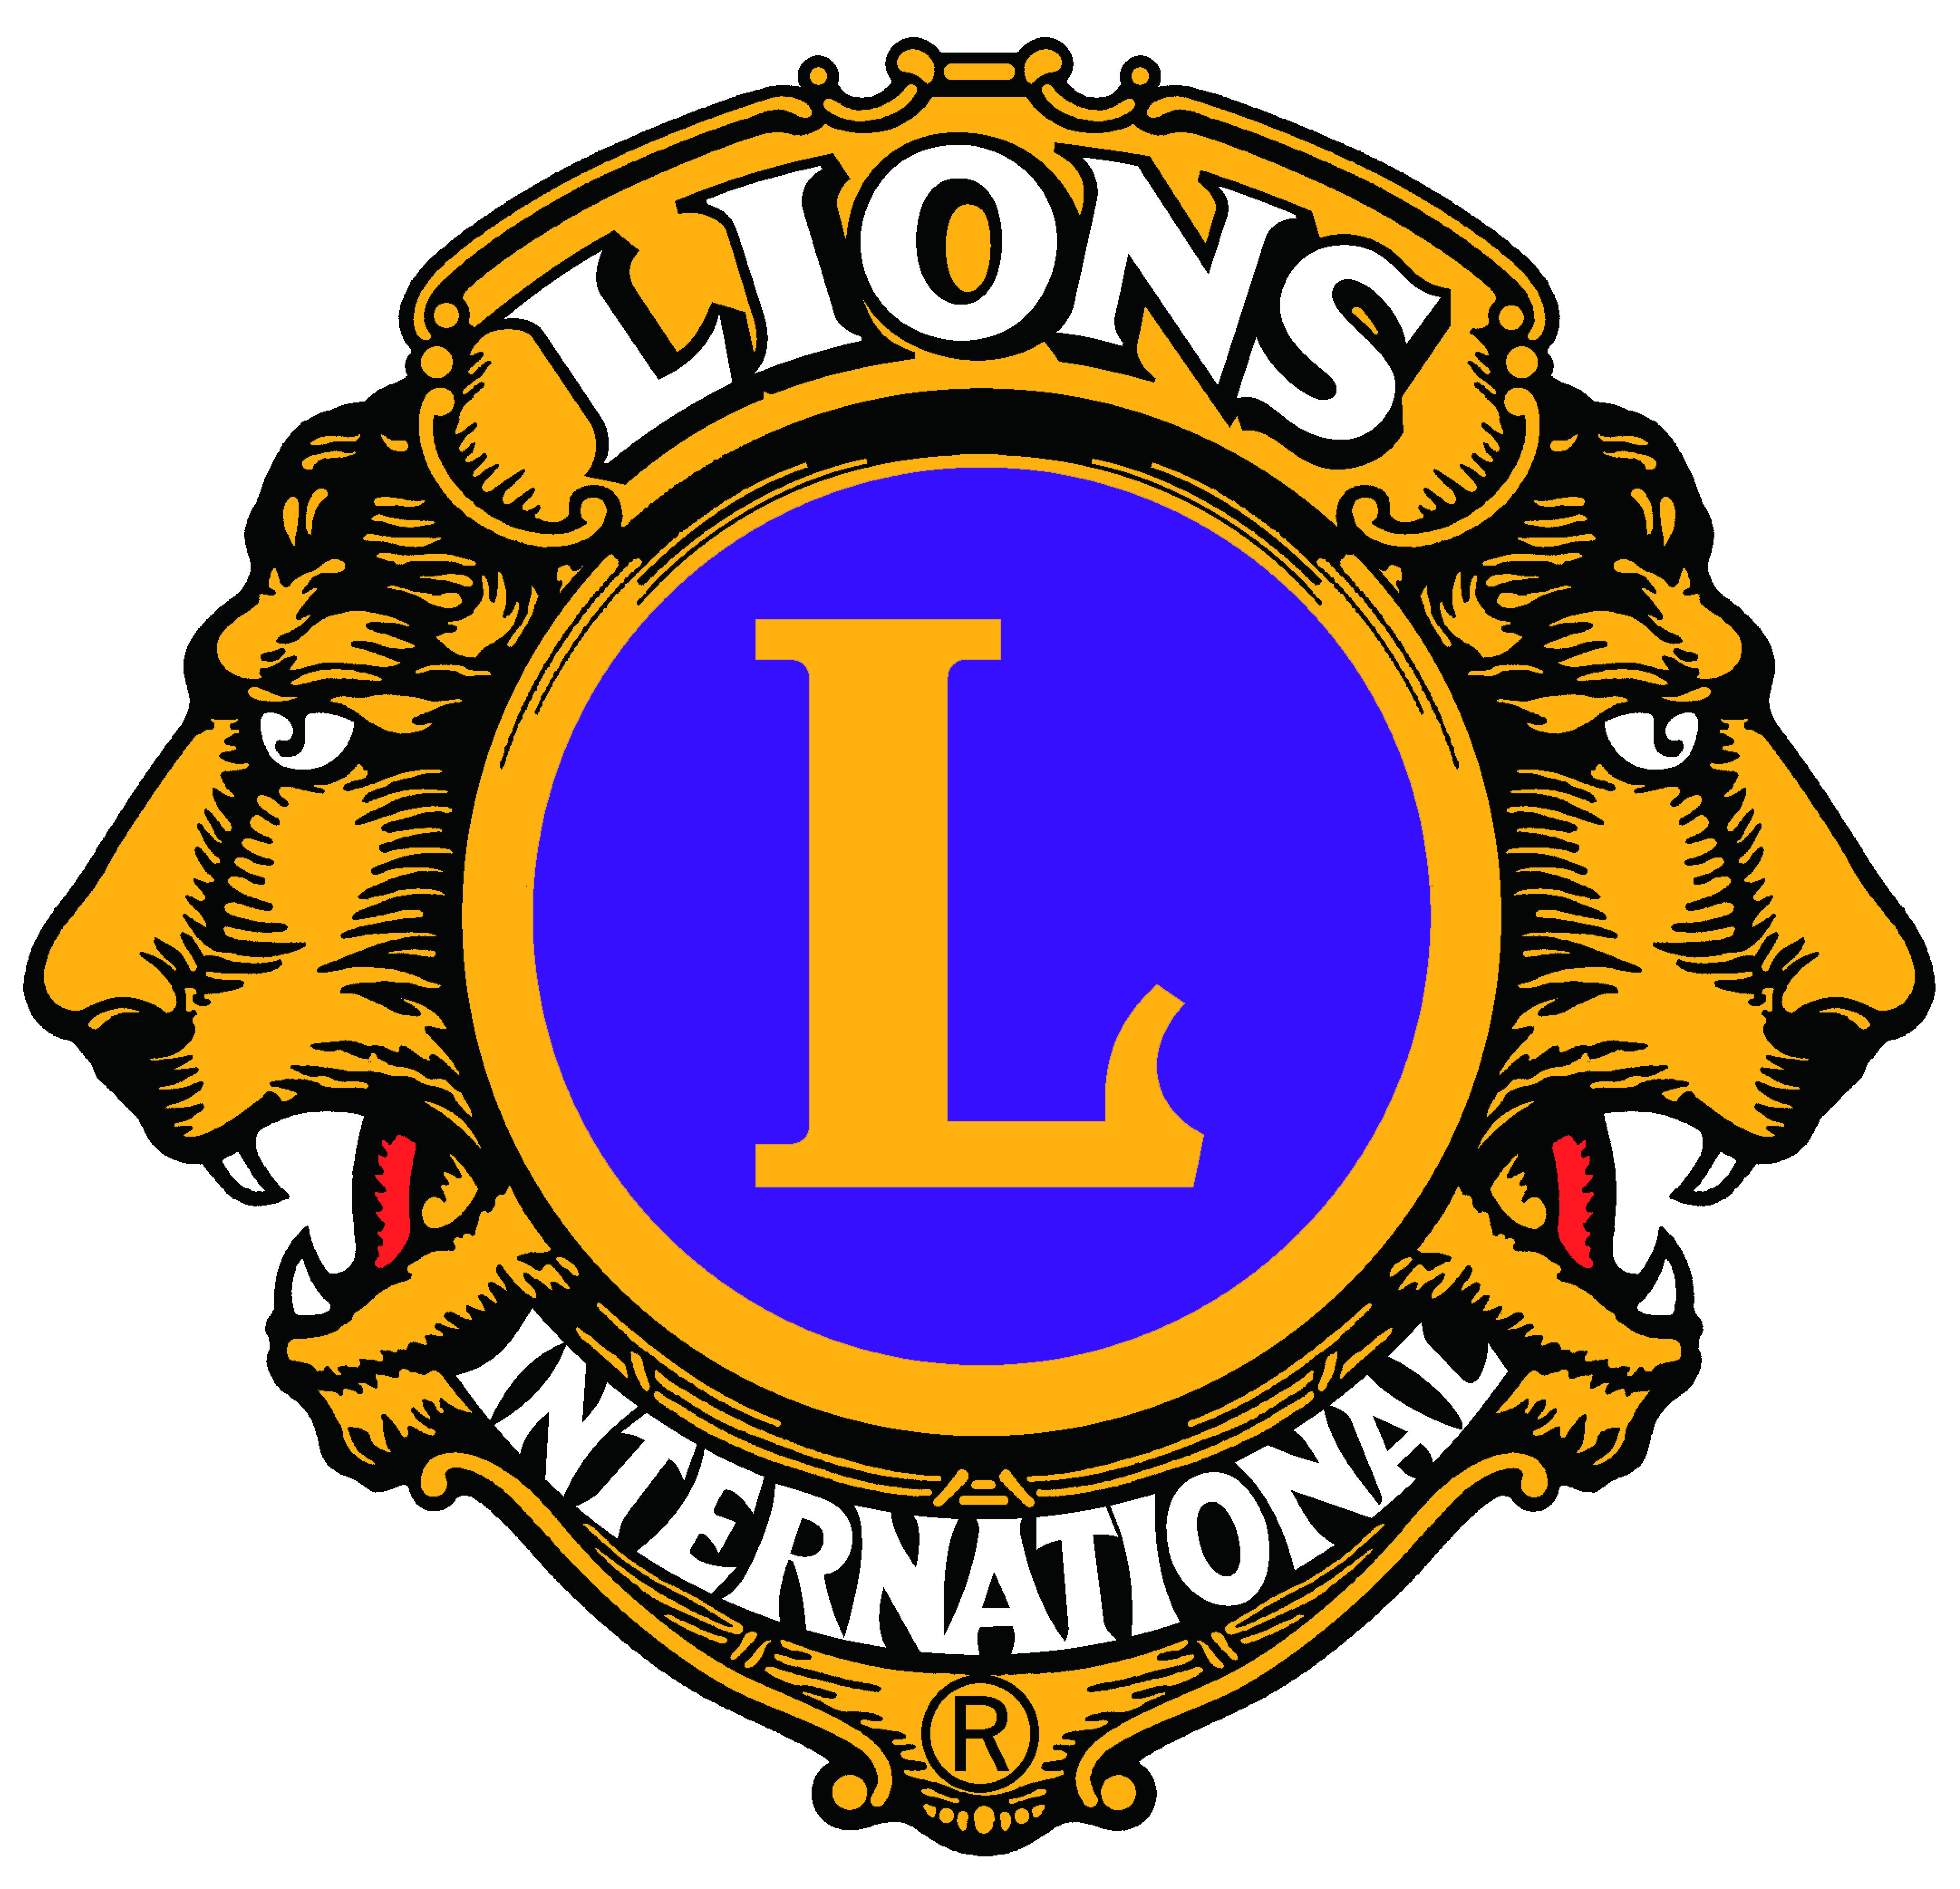 Lions club international Logos.